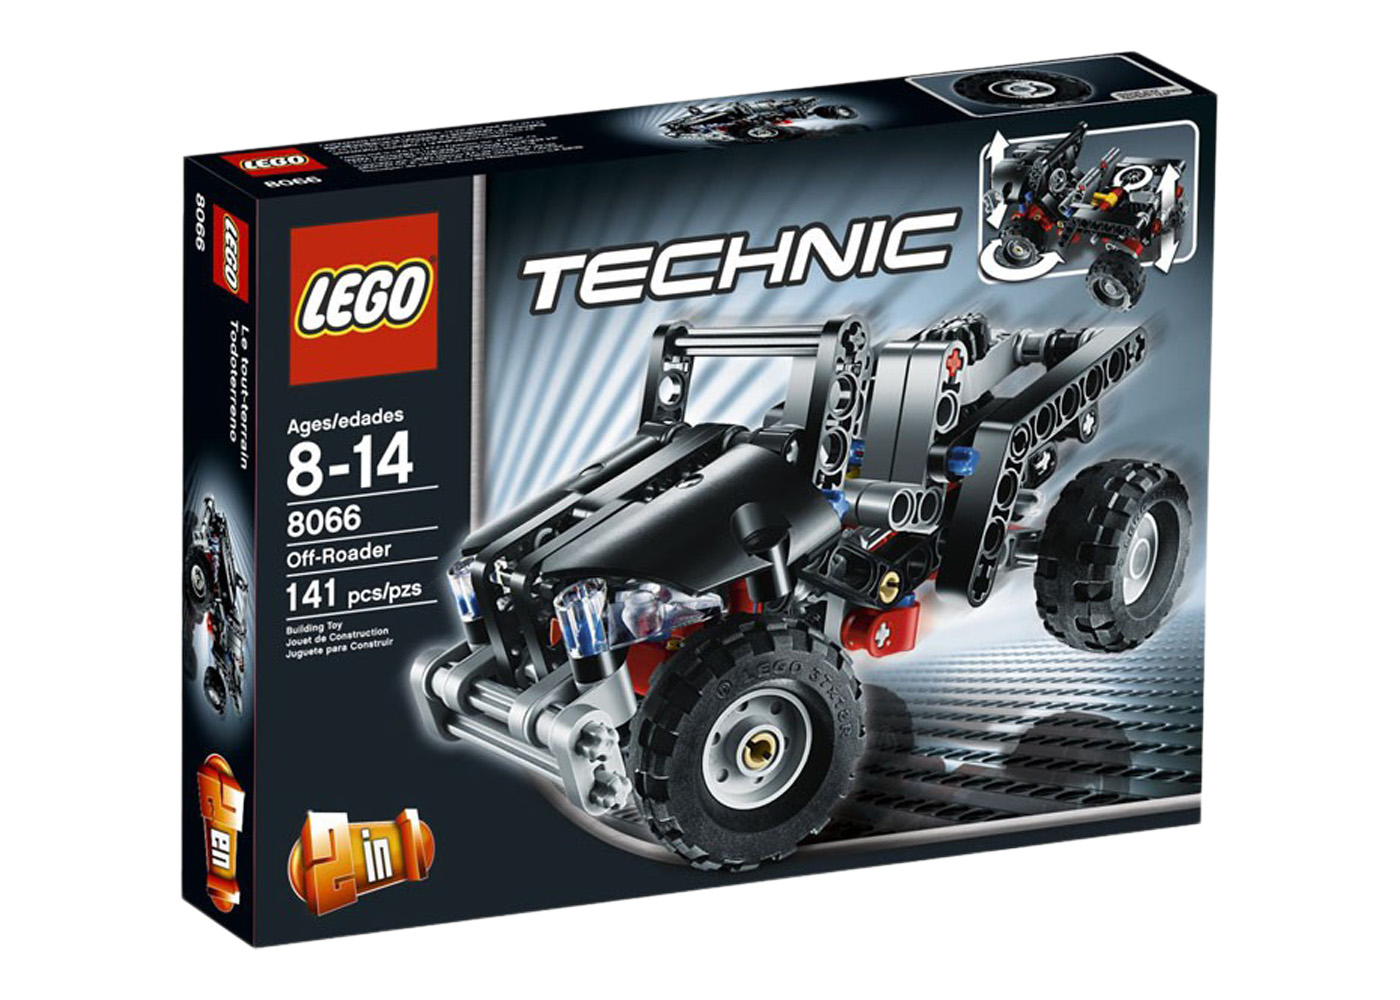 LEGO Technic Off-Roader Set 8066 - GB